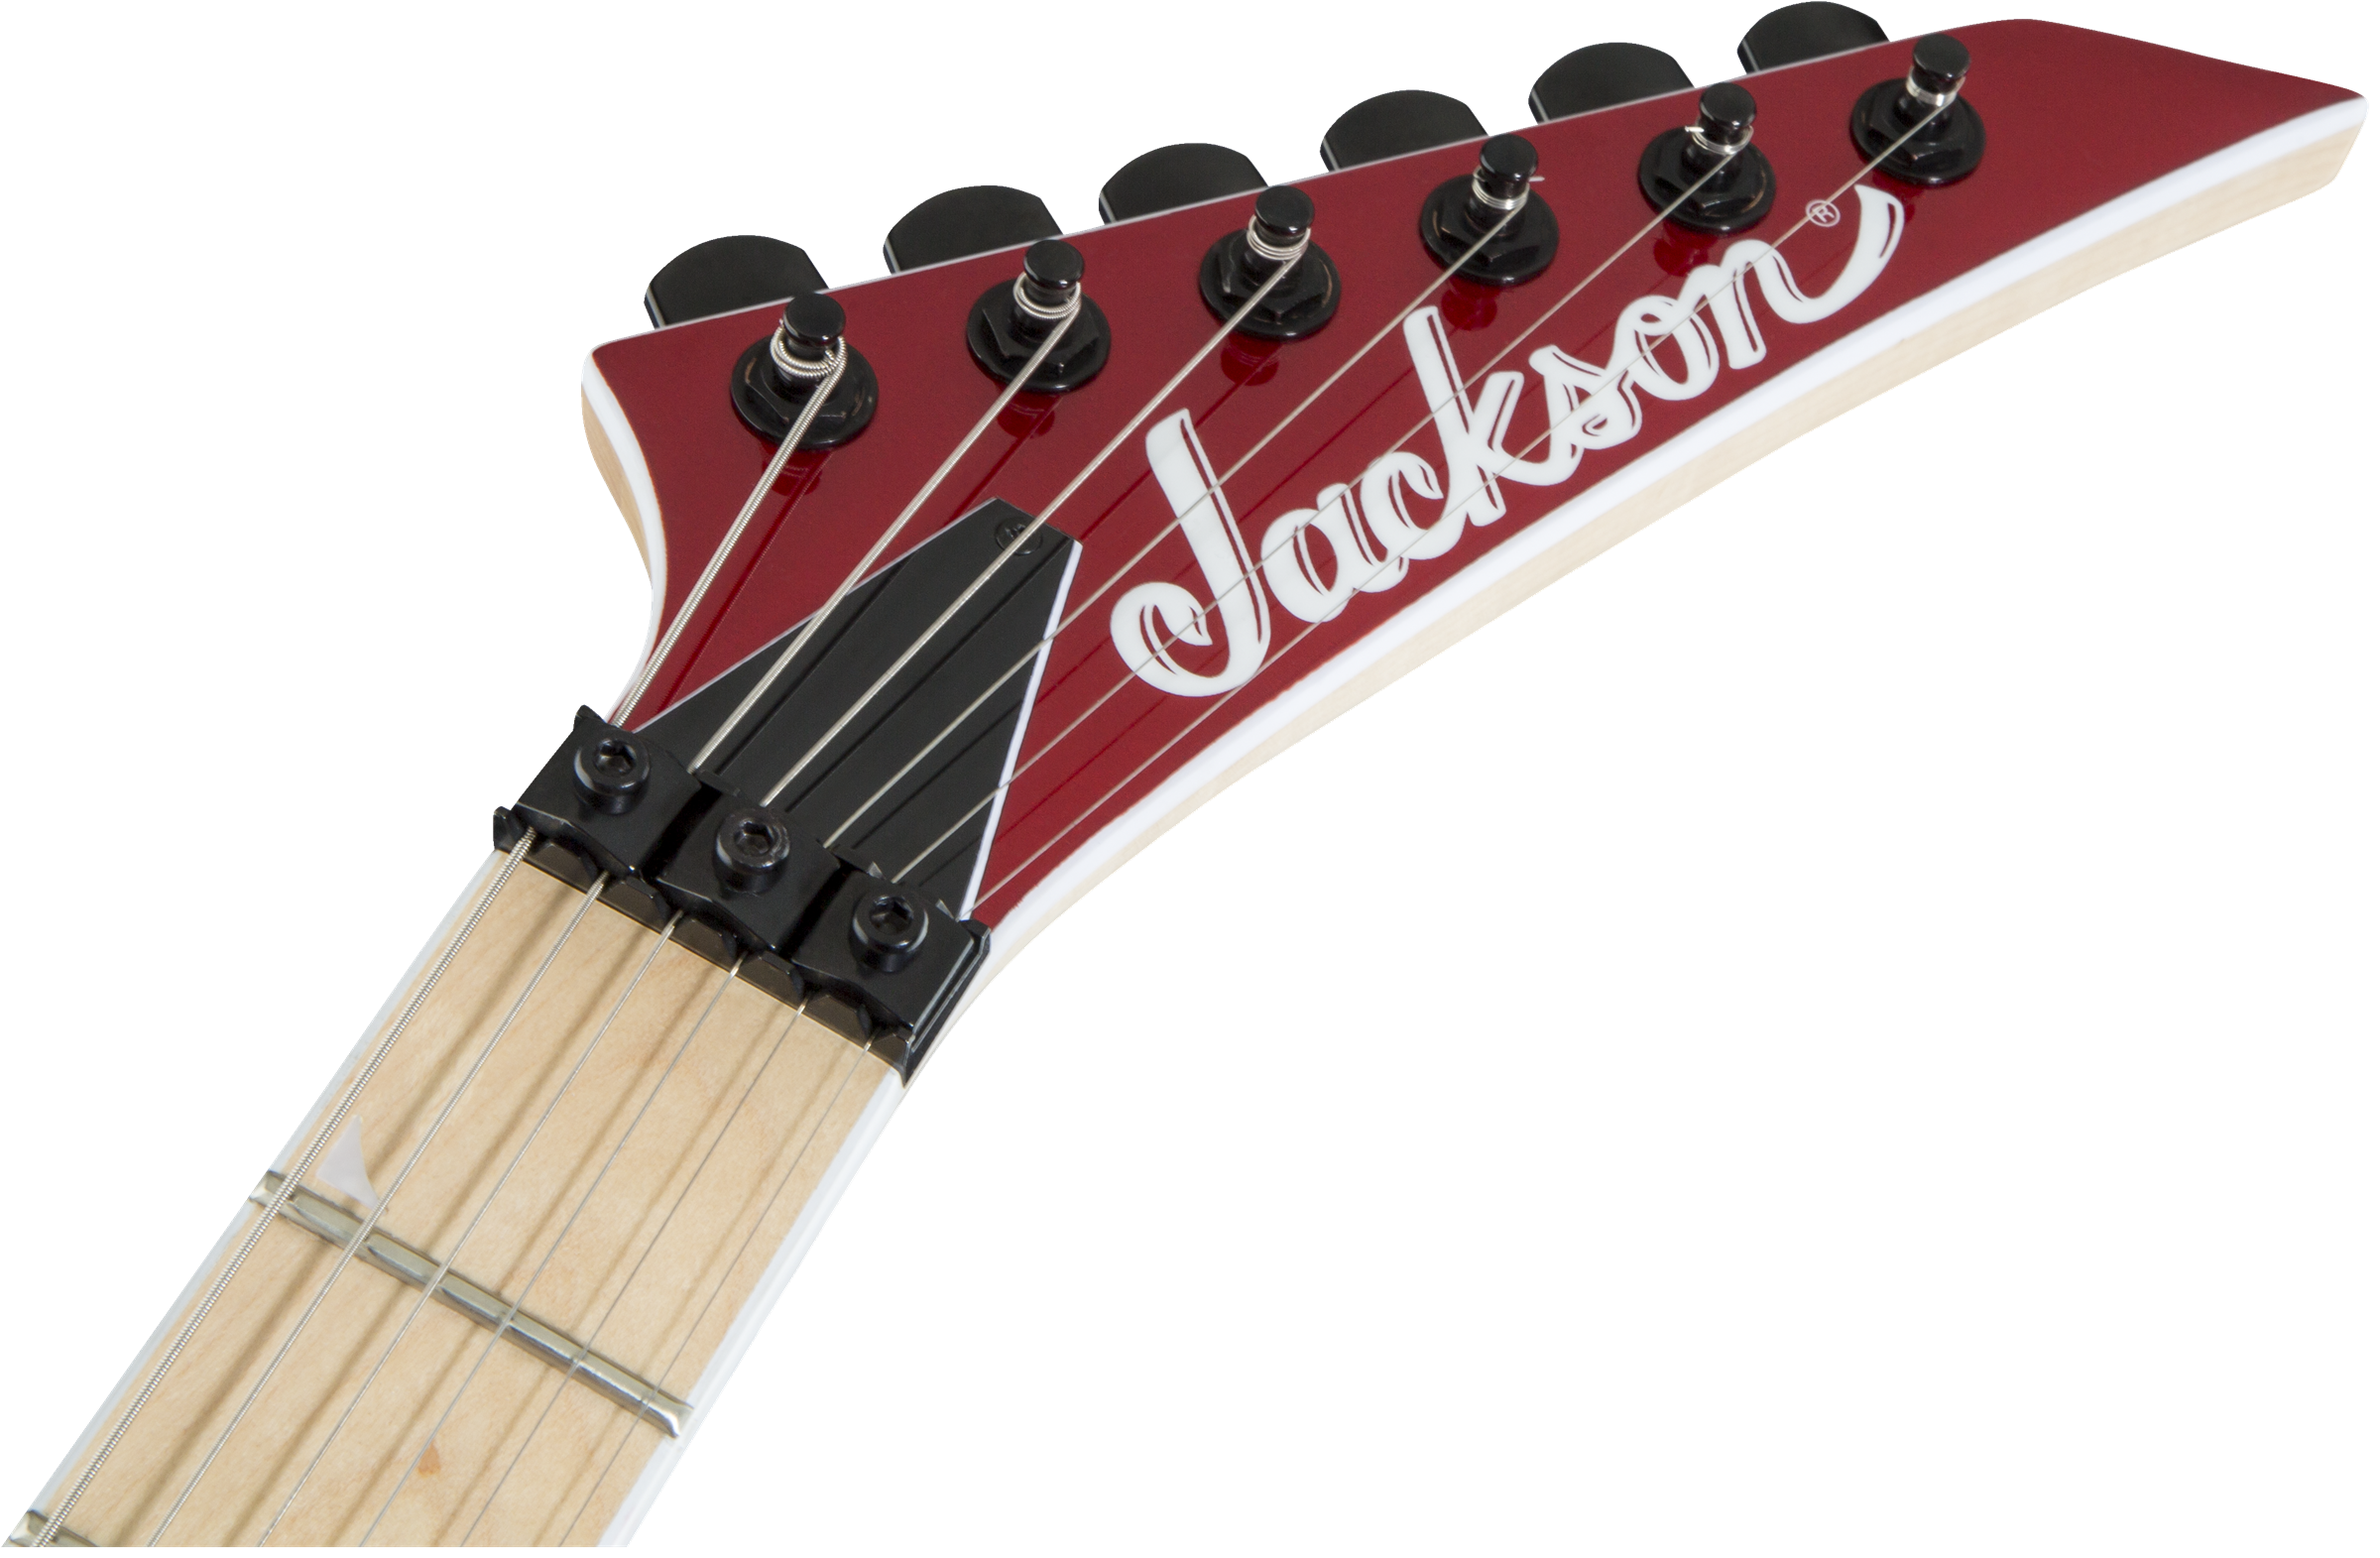 Jackson Pro Series Soloist SL2M Maple Fingerboard Metallic Red 2019